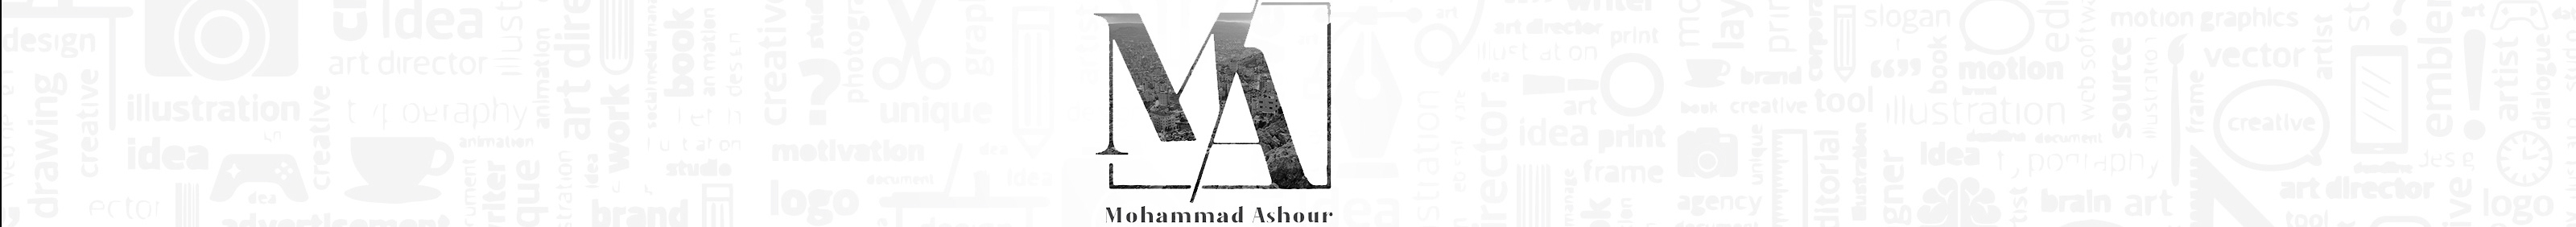 Mohammad Ashour profil başlığı